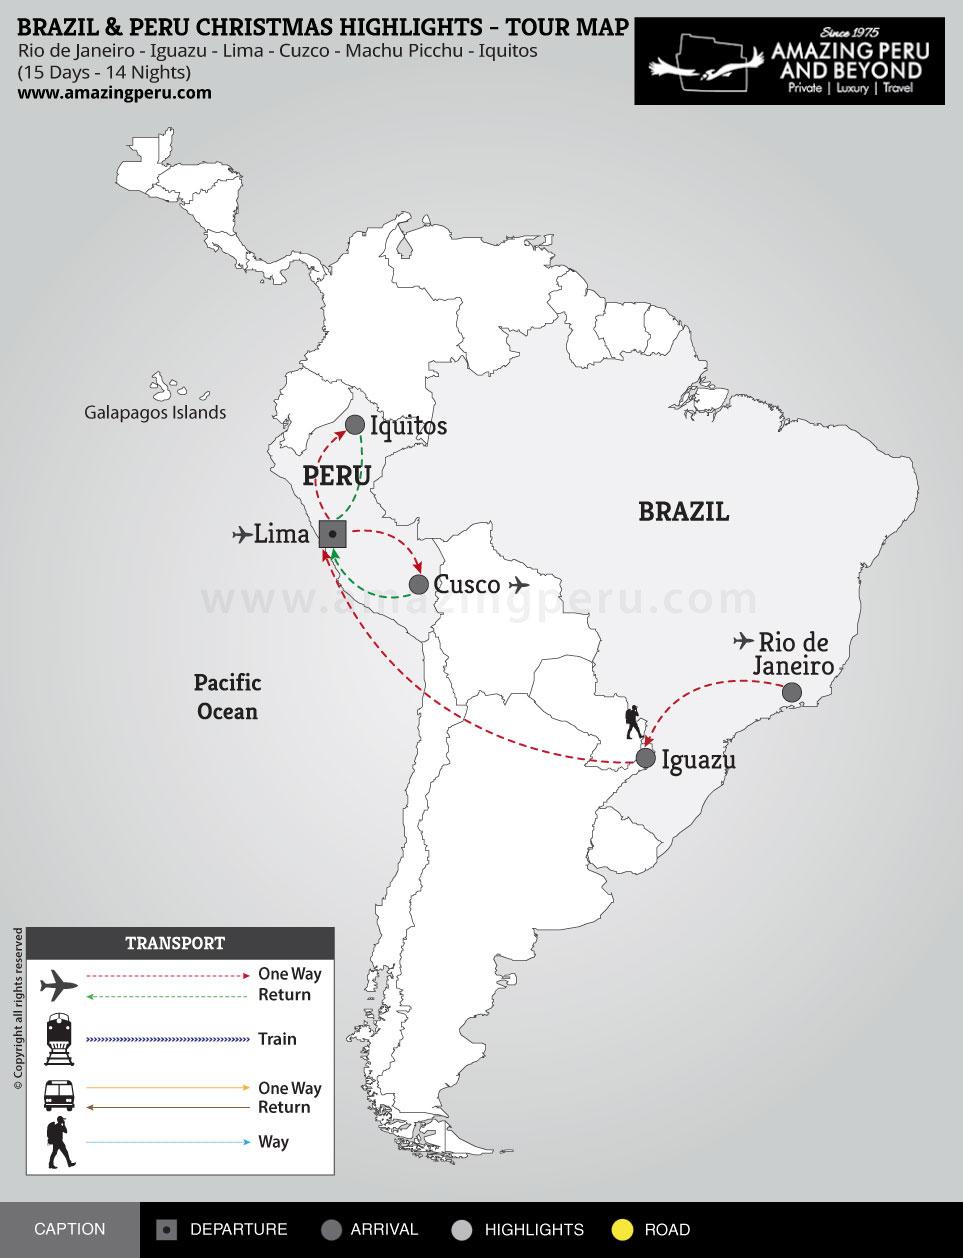 Brazil & Peru Christmas Highlights Tour - 15 days / 14 nights.